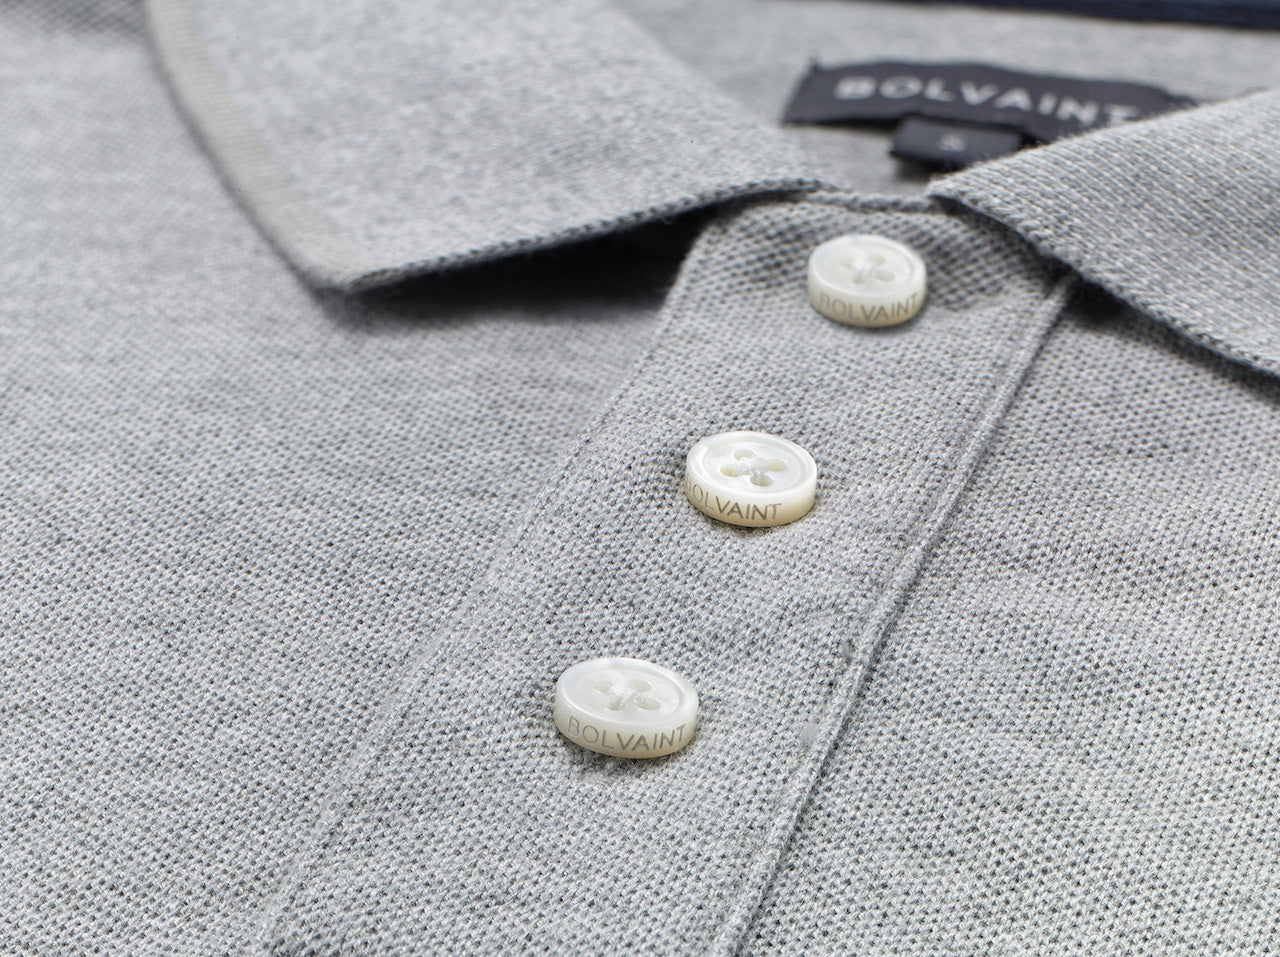 Abreu Polo Shirt in Ocean Grey – Bolvaint – Paris